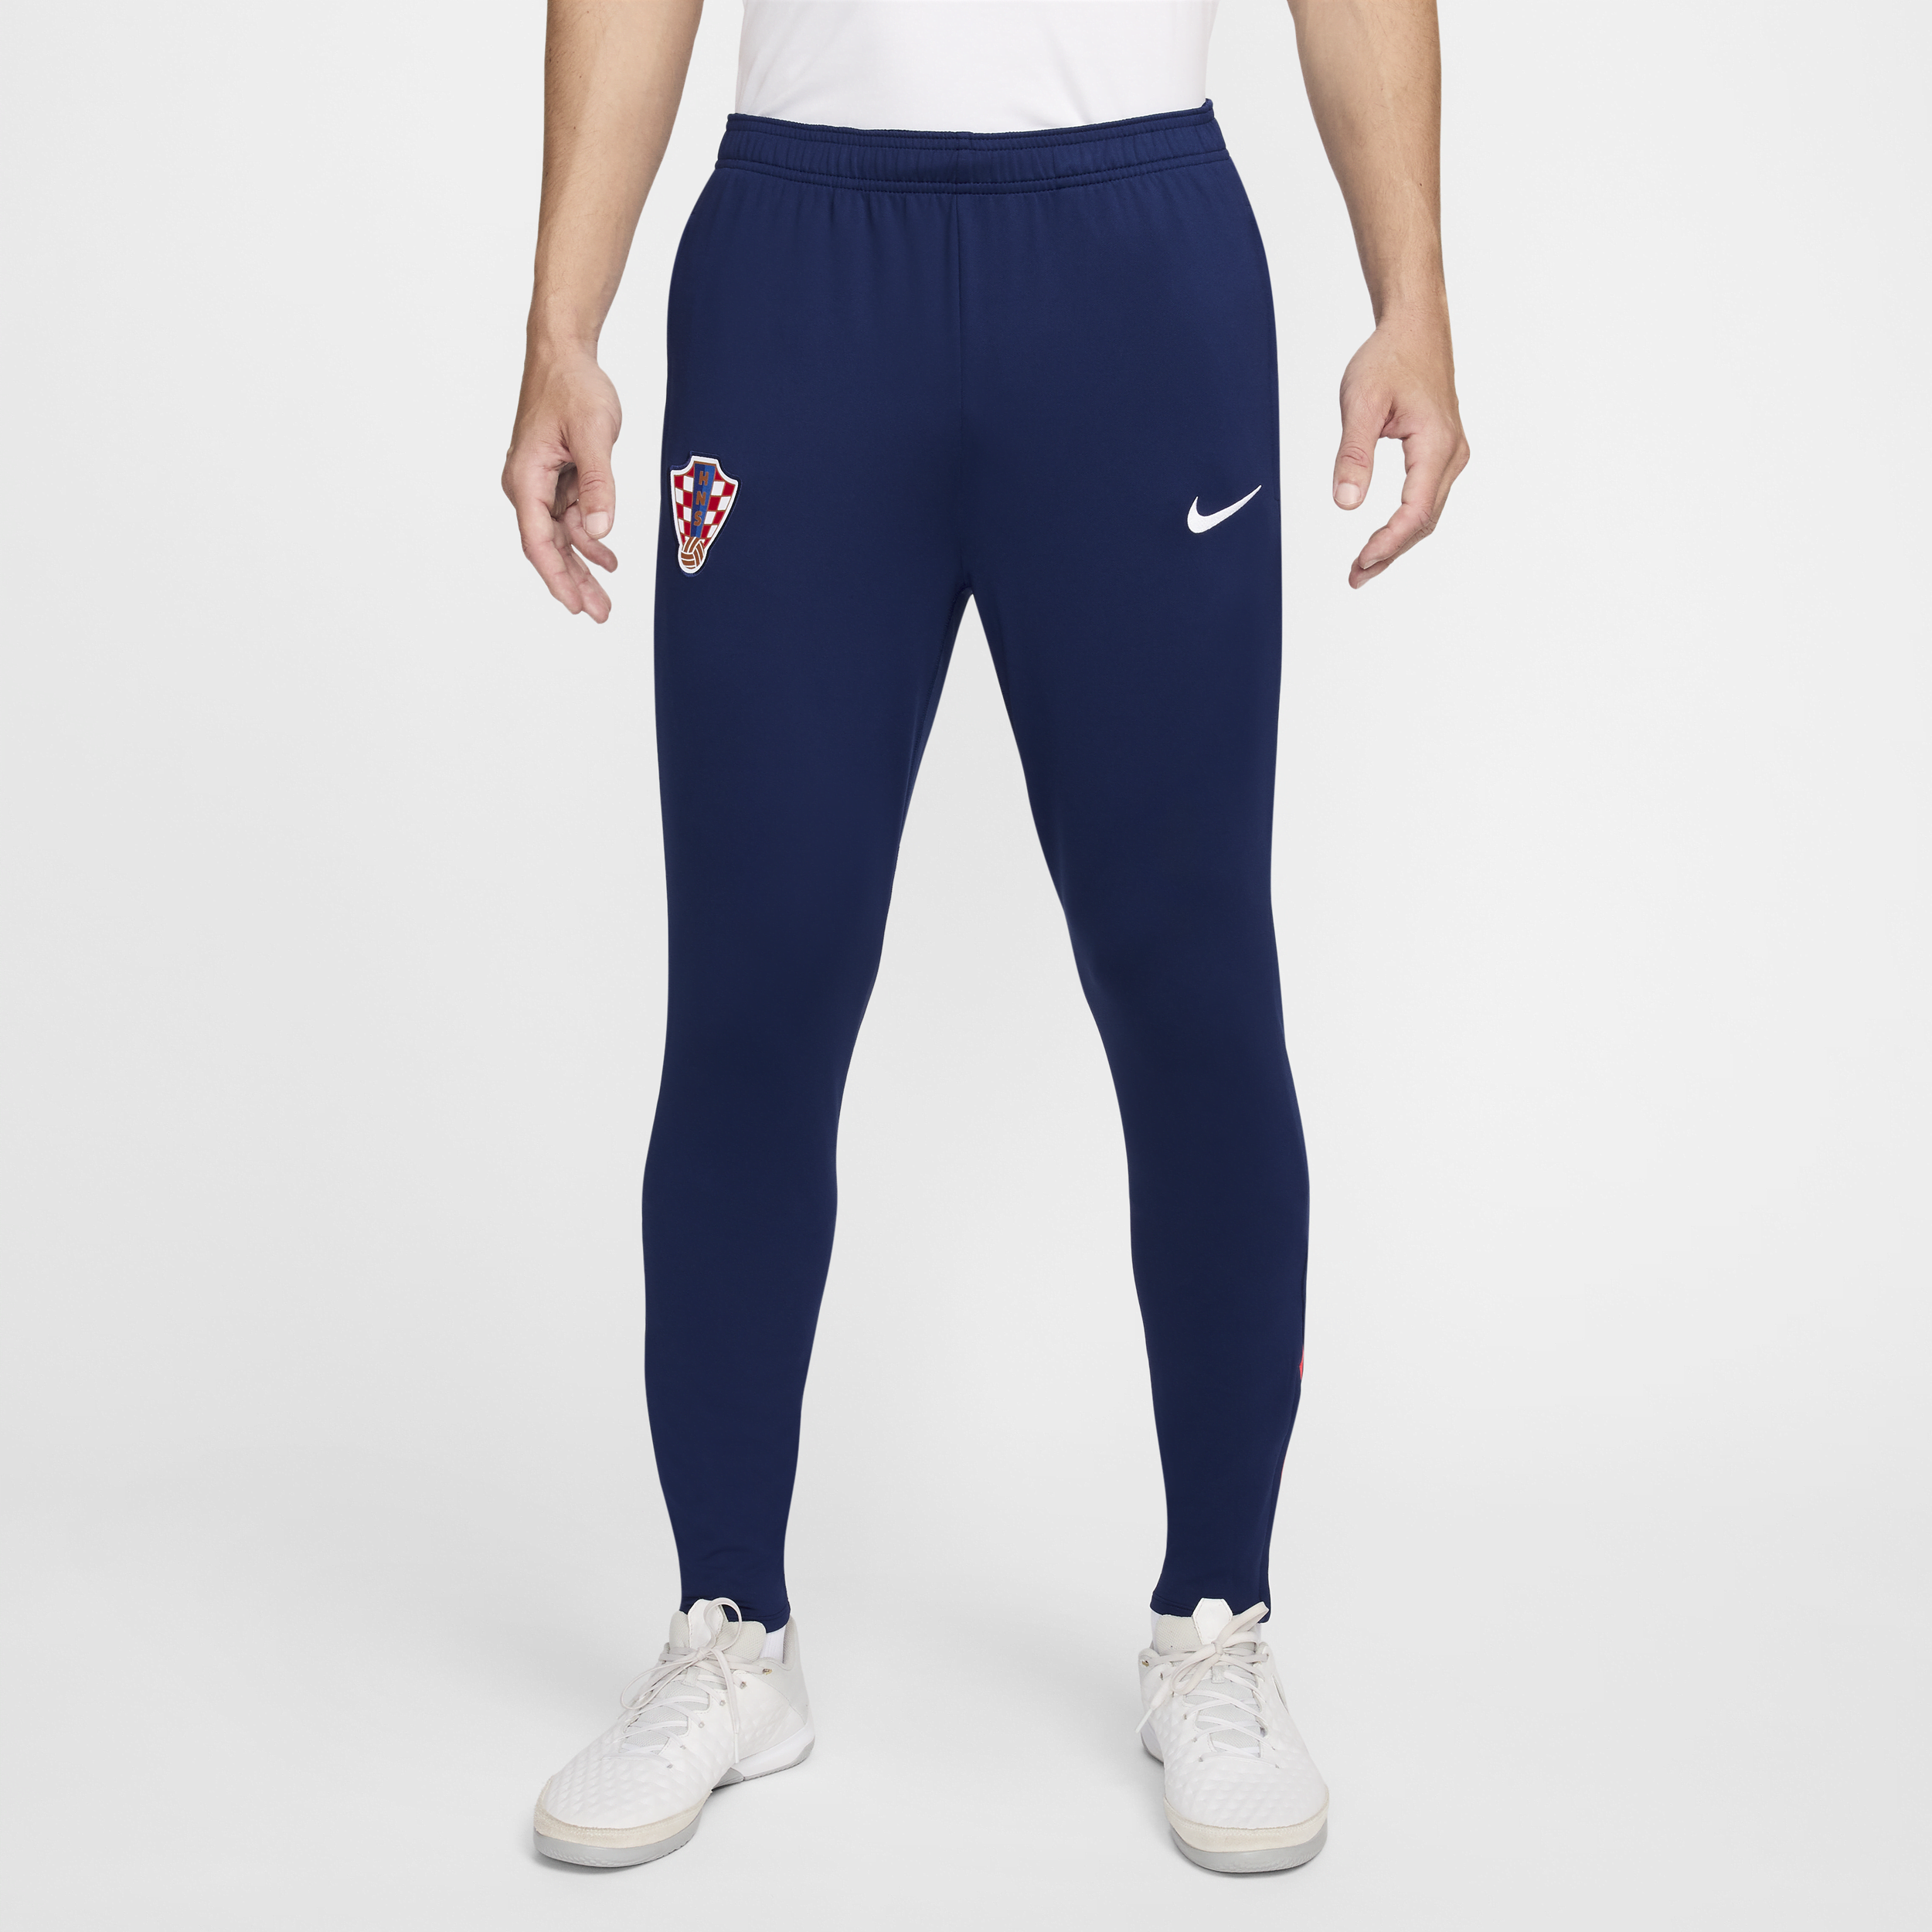 Pantaloni da calcio Nike Dri-FIT Croazia Strike – Uomo - Blu